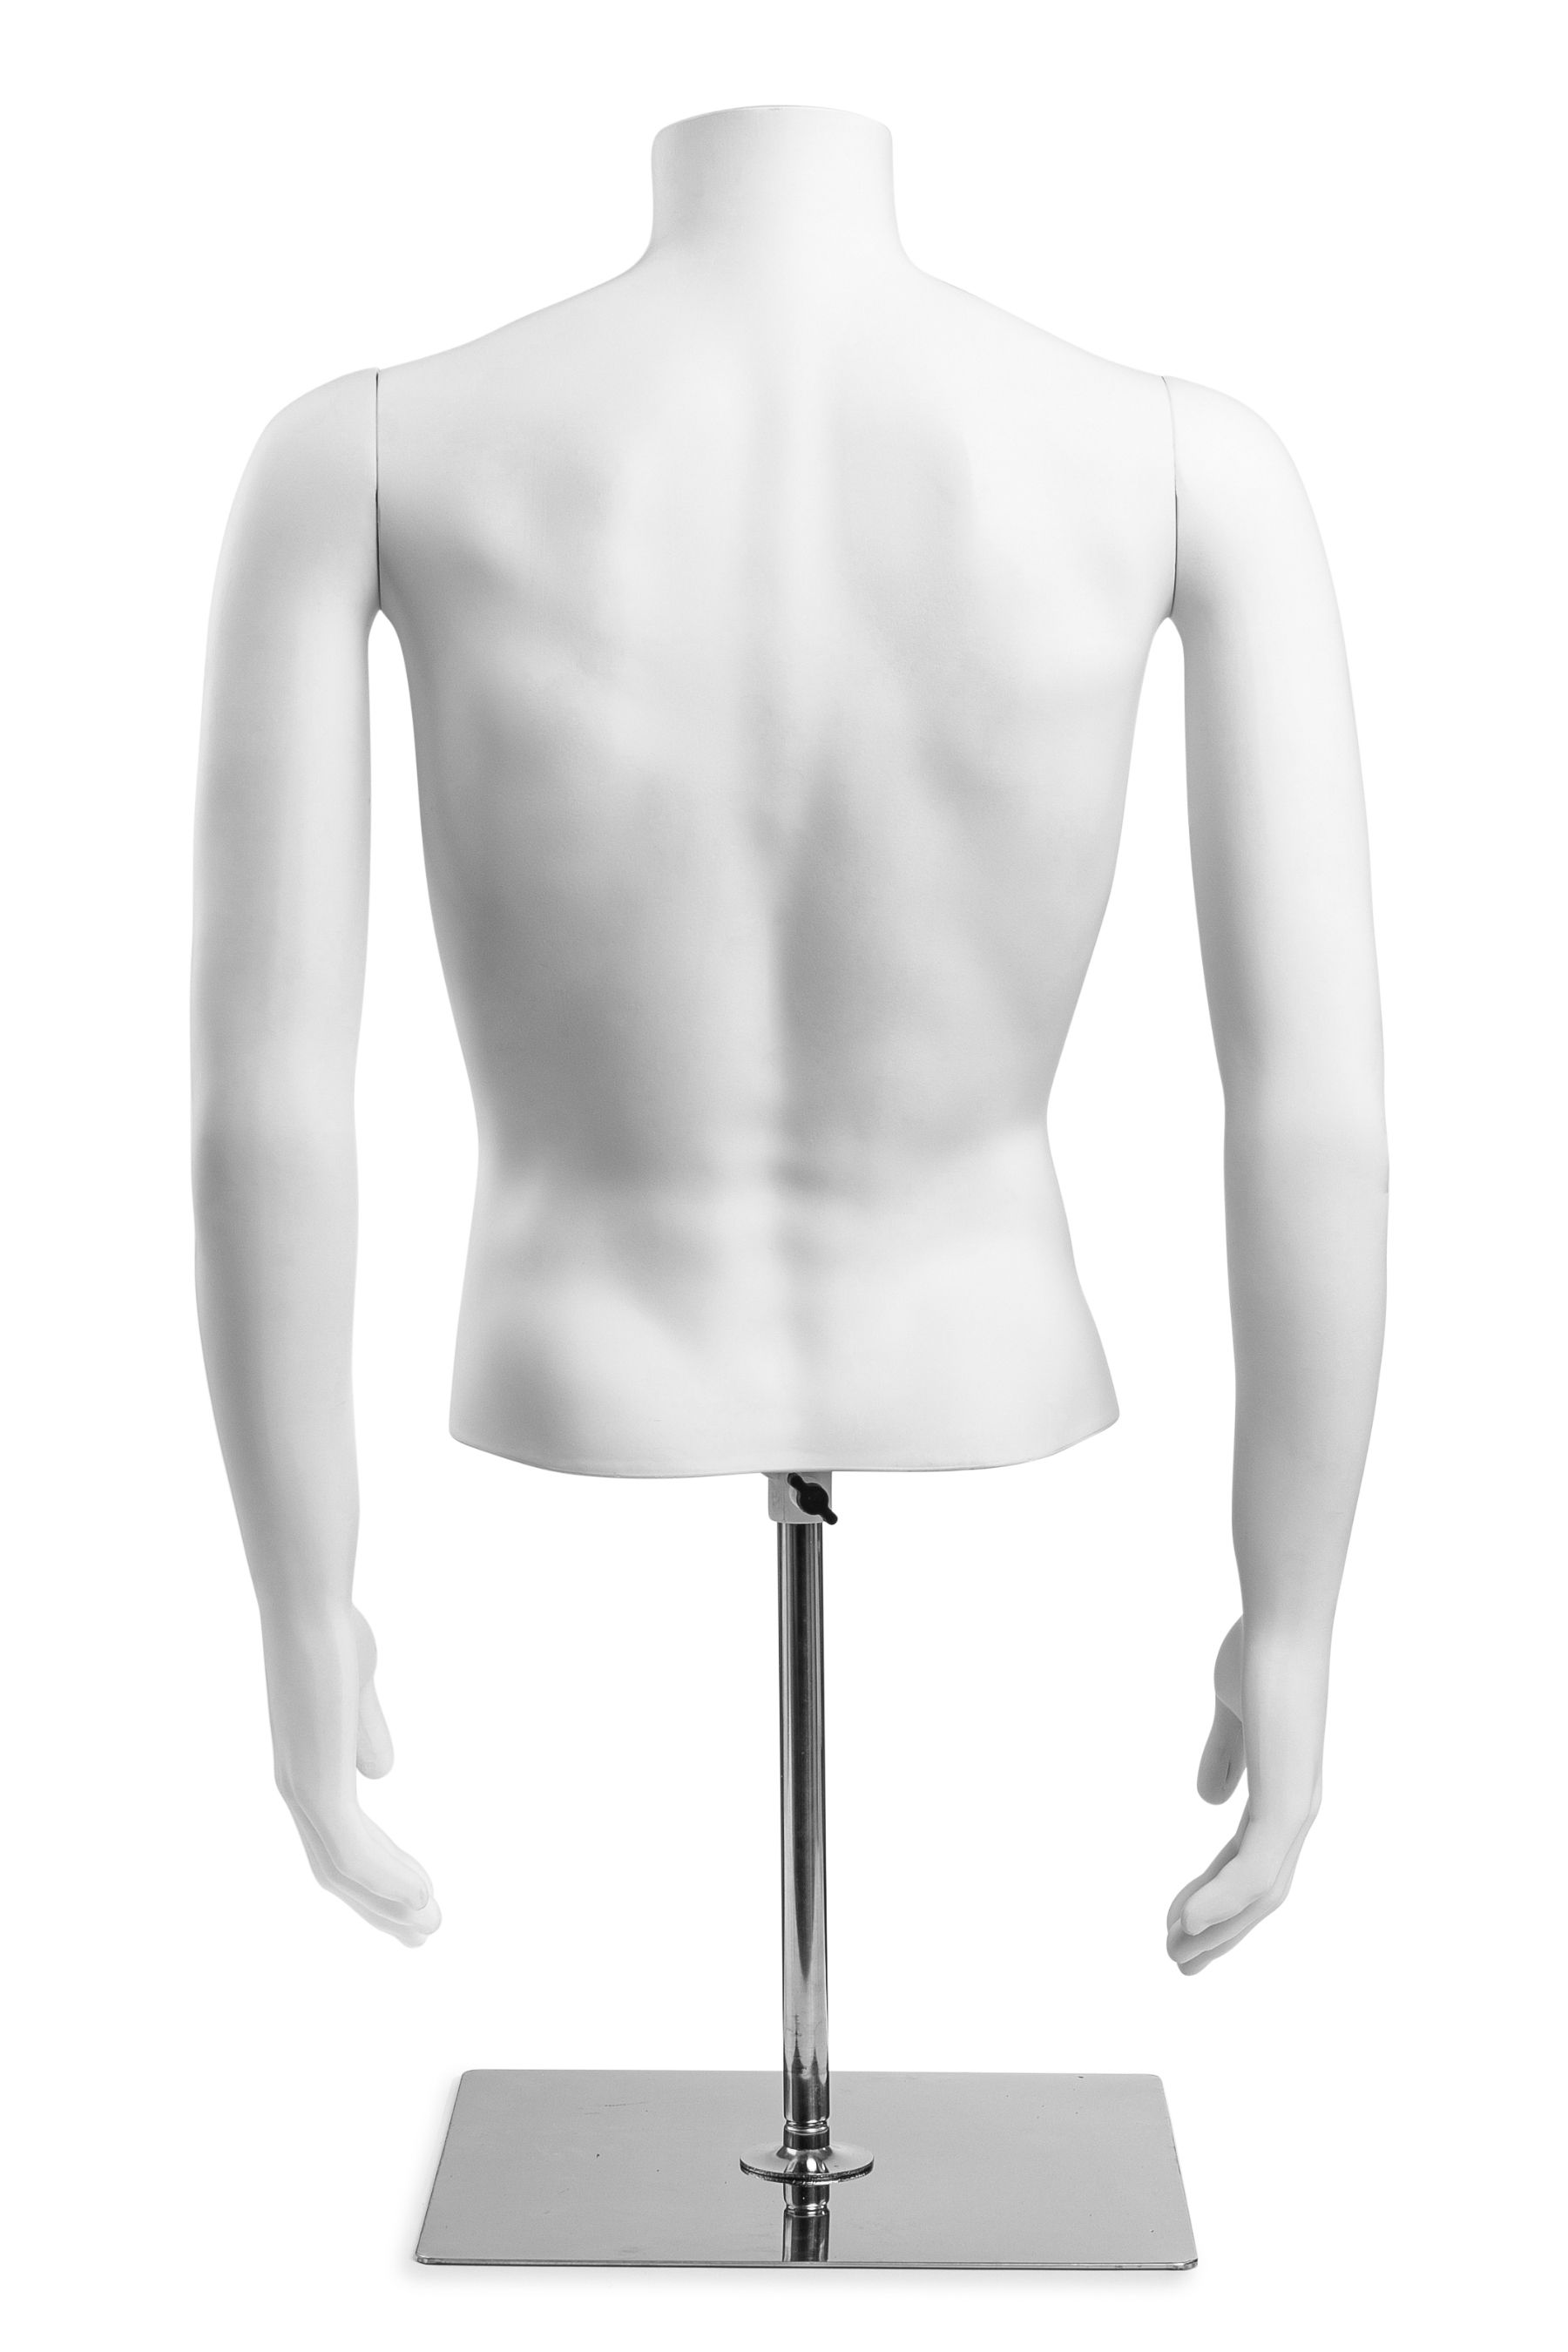 Details about   MN-247 FLESHTONE Plastic Male Upper Torso Countertop Mannequin w/ Removable Head 